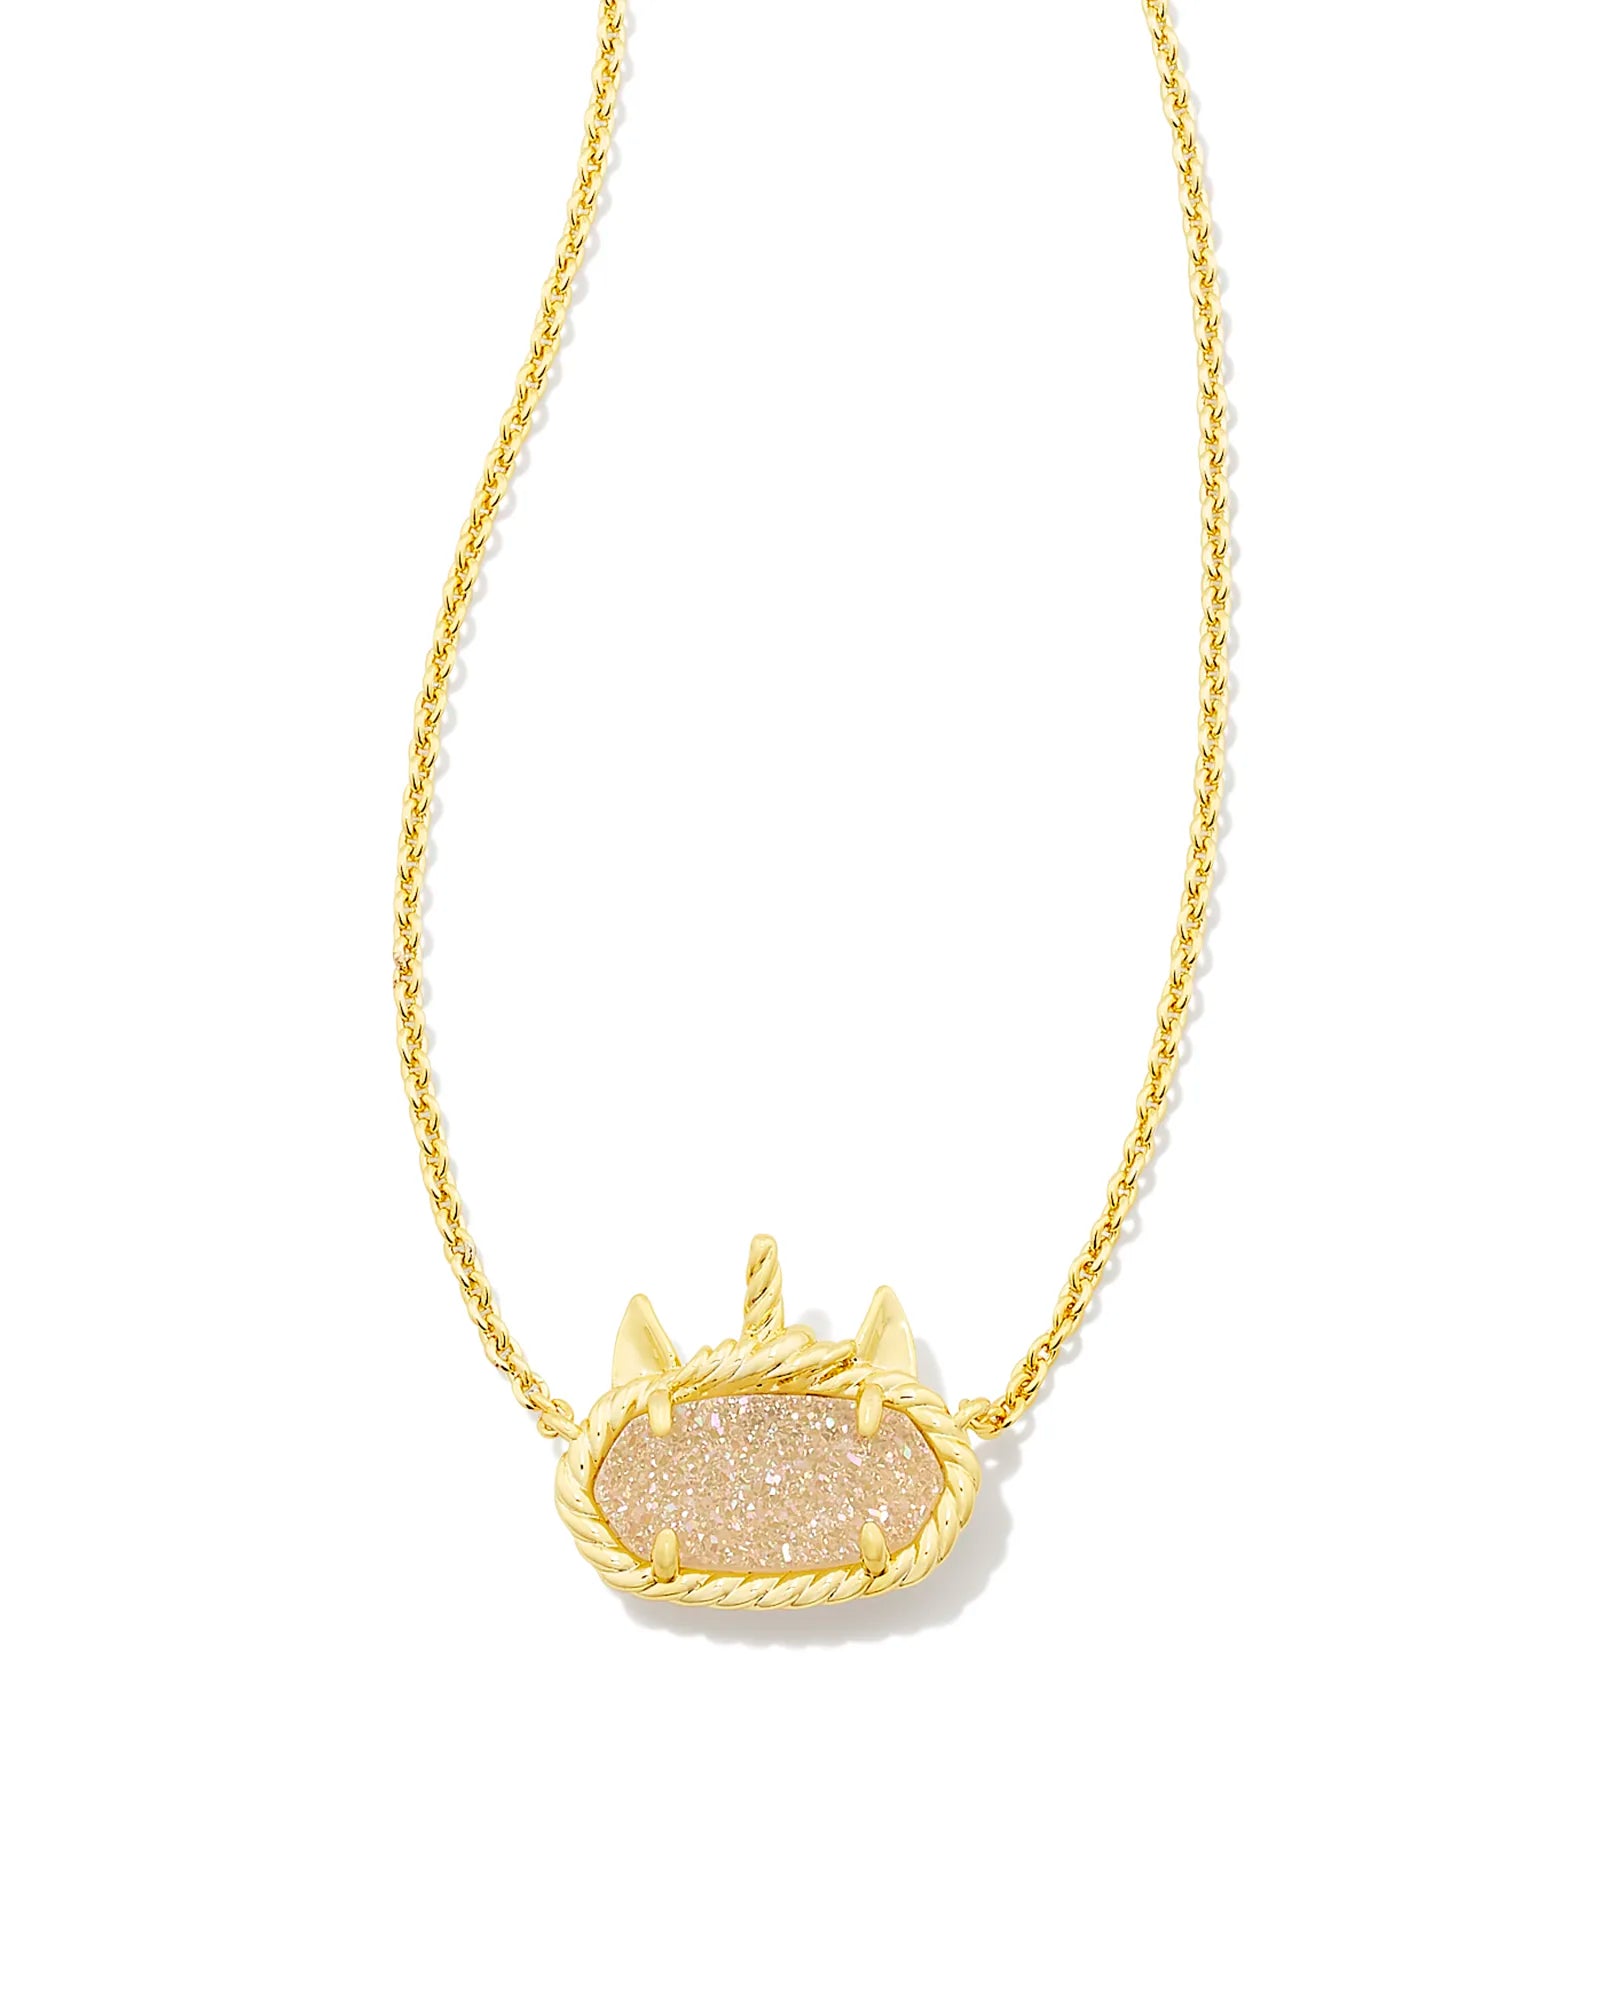 KENDRA SCOTT- Elisa Unicorn Gold Short Pendant Necklace in Iridescent Drusy